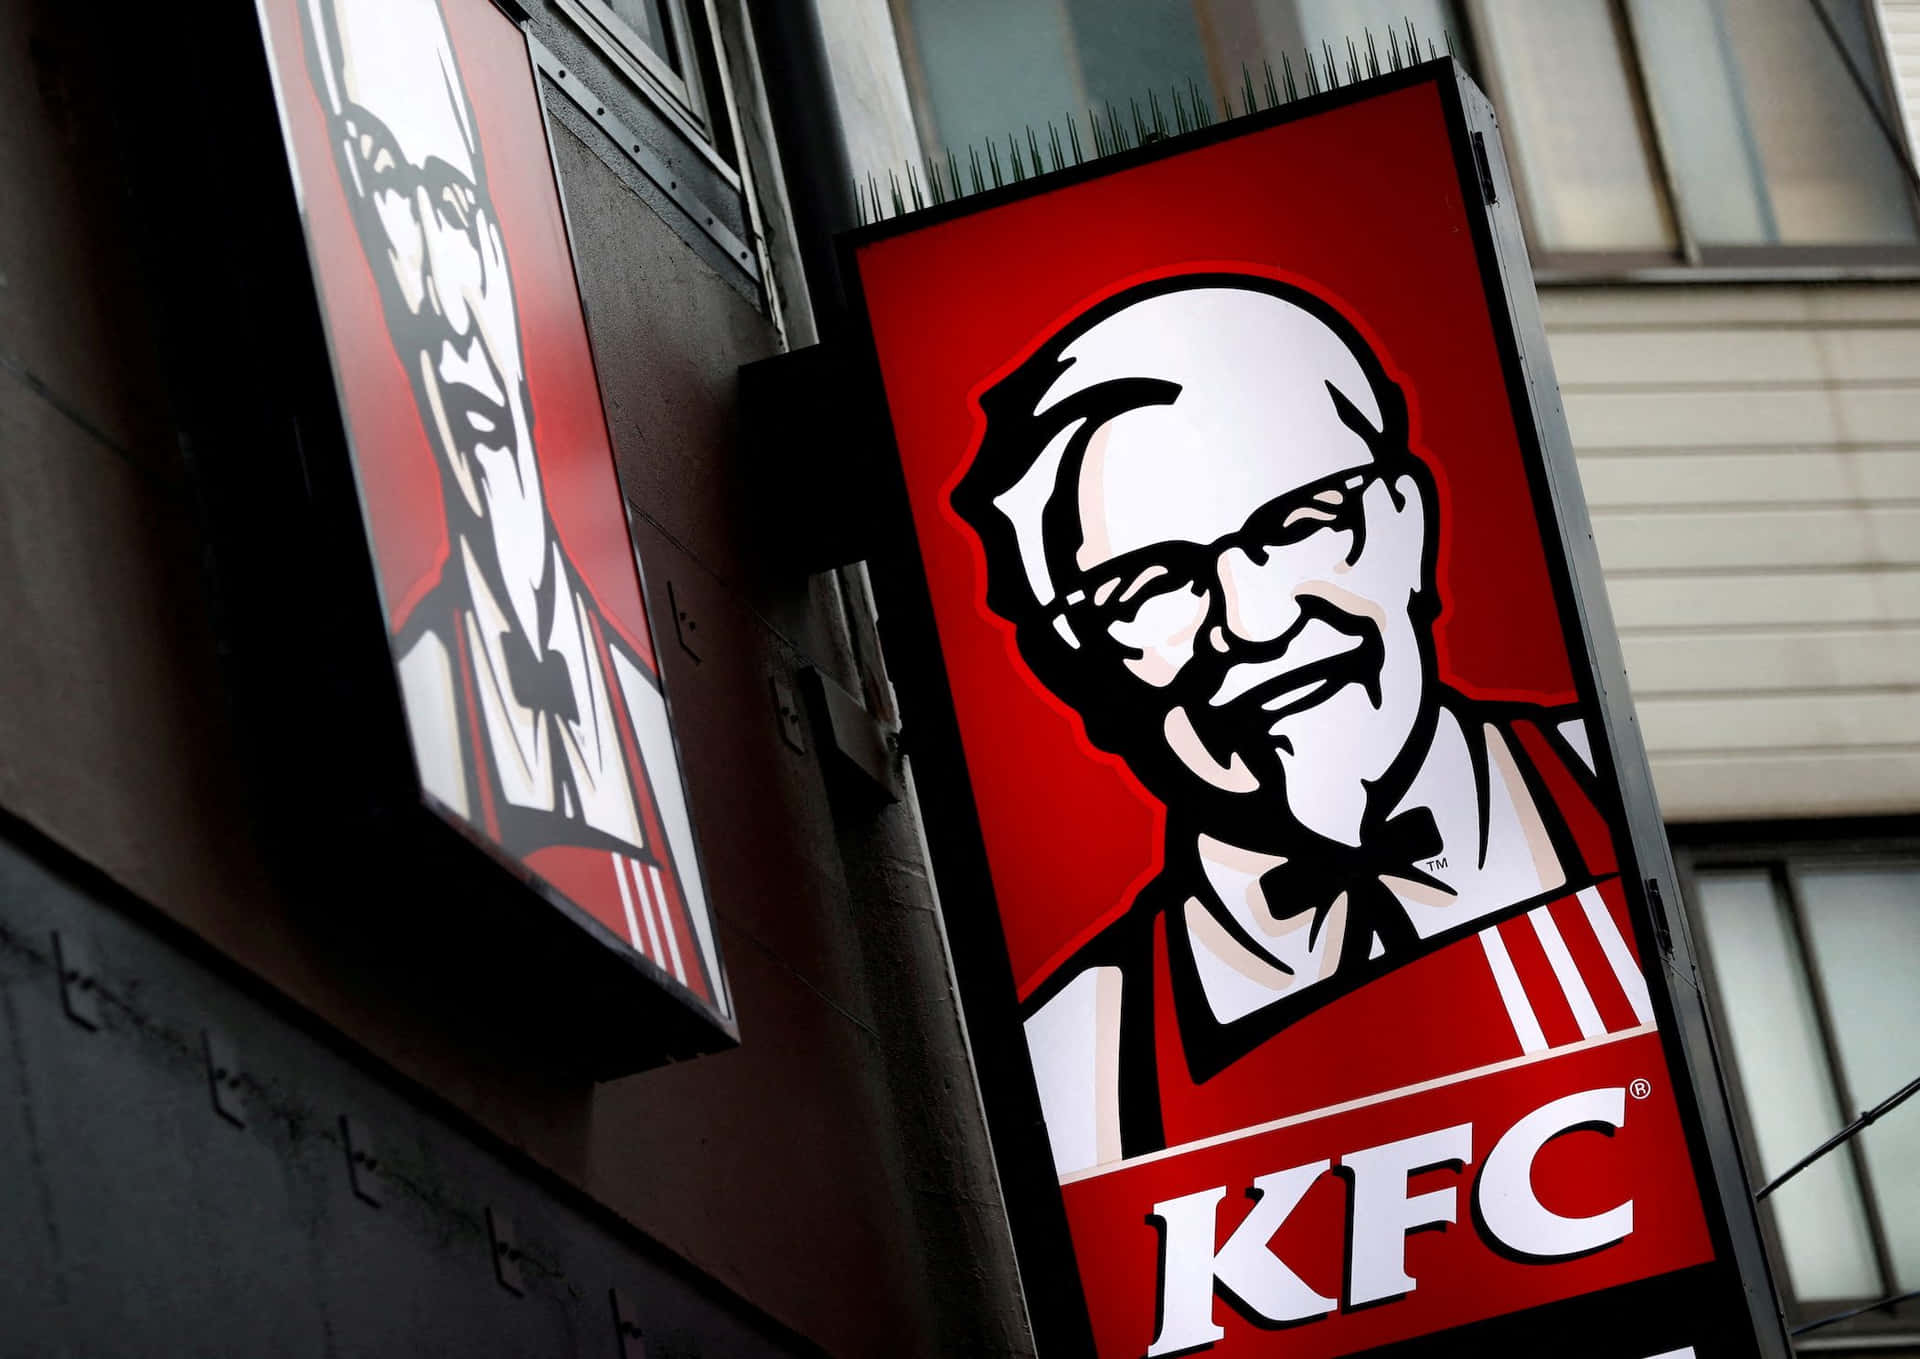 KFC - For Finger Lickin' Good Snacks and Meals